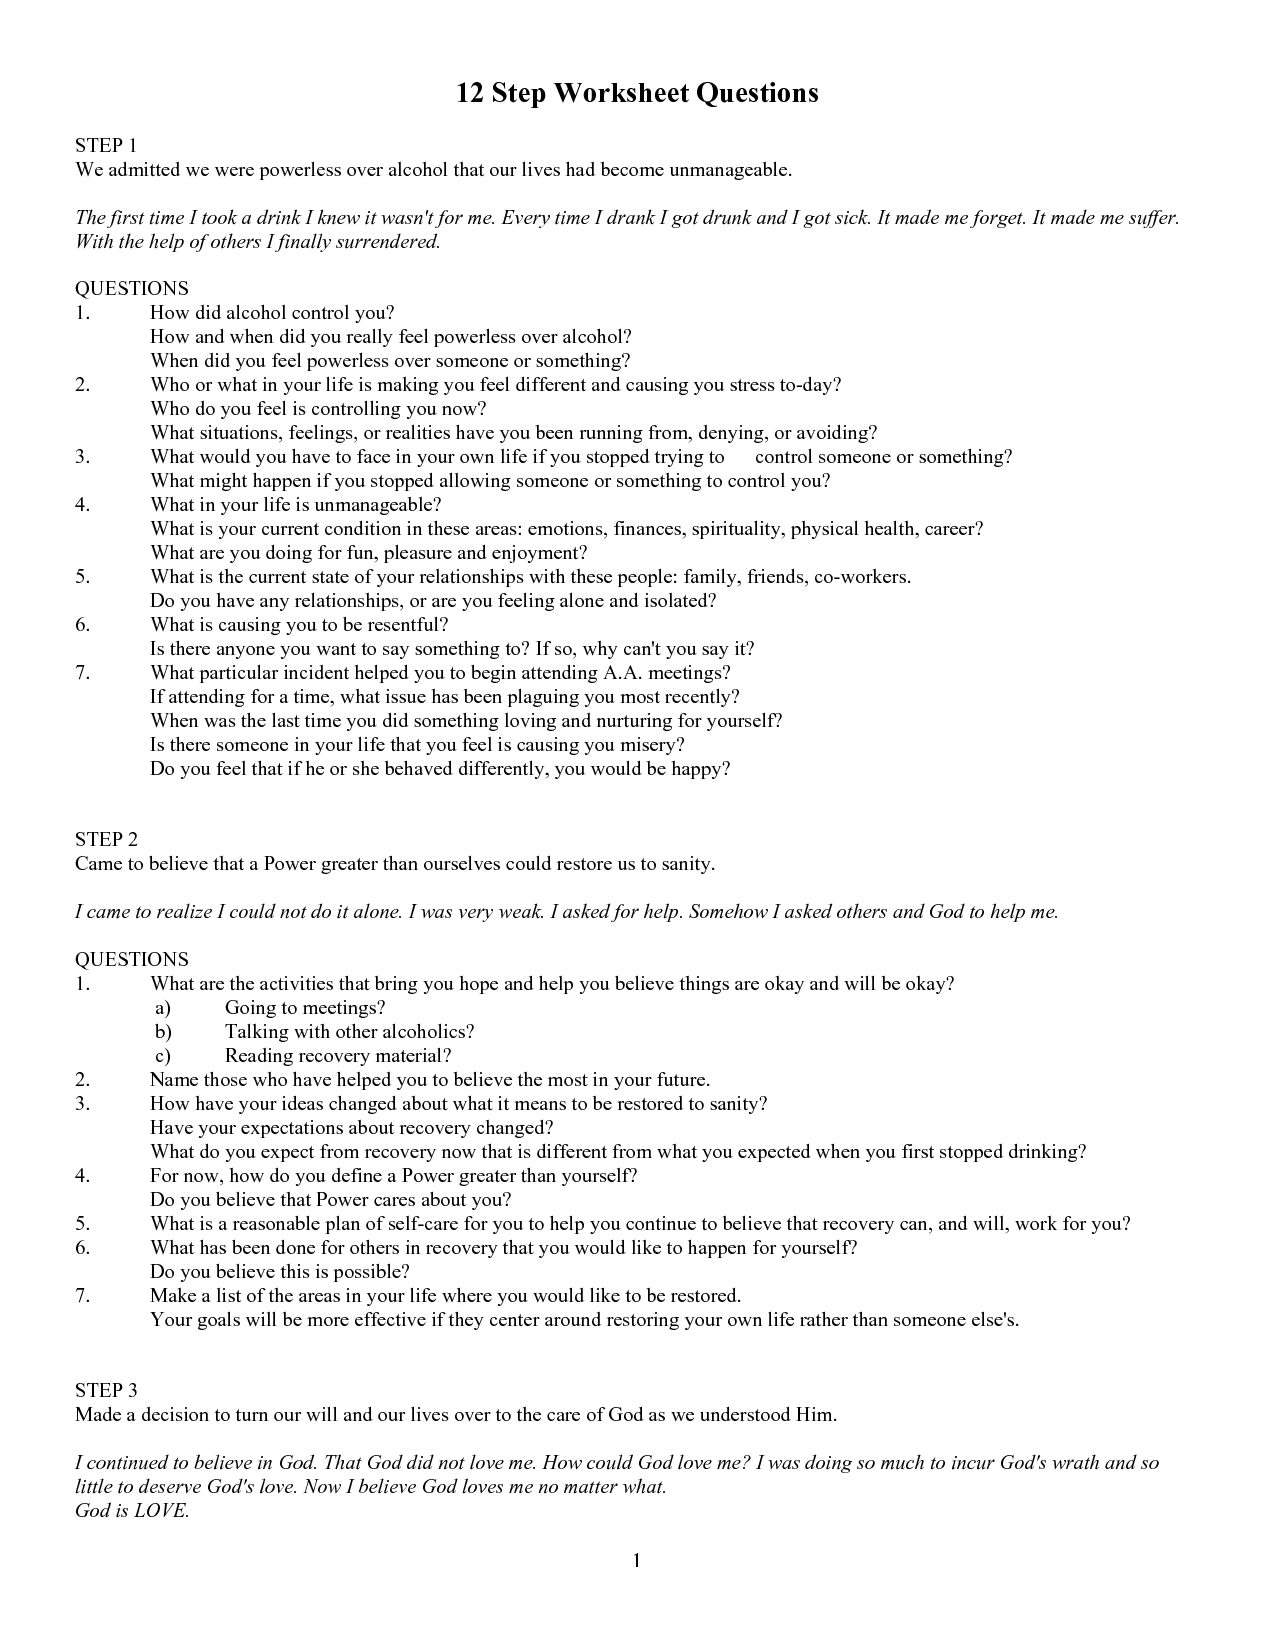 15 Best Images of Step 8 Worksheets  MultiStep Word Problems Worksheets, Printable 4th Step 